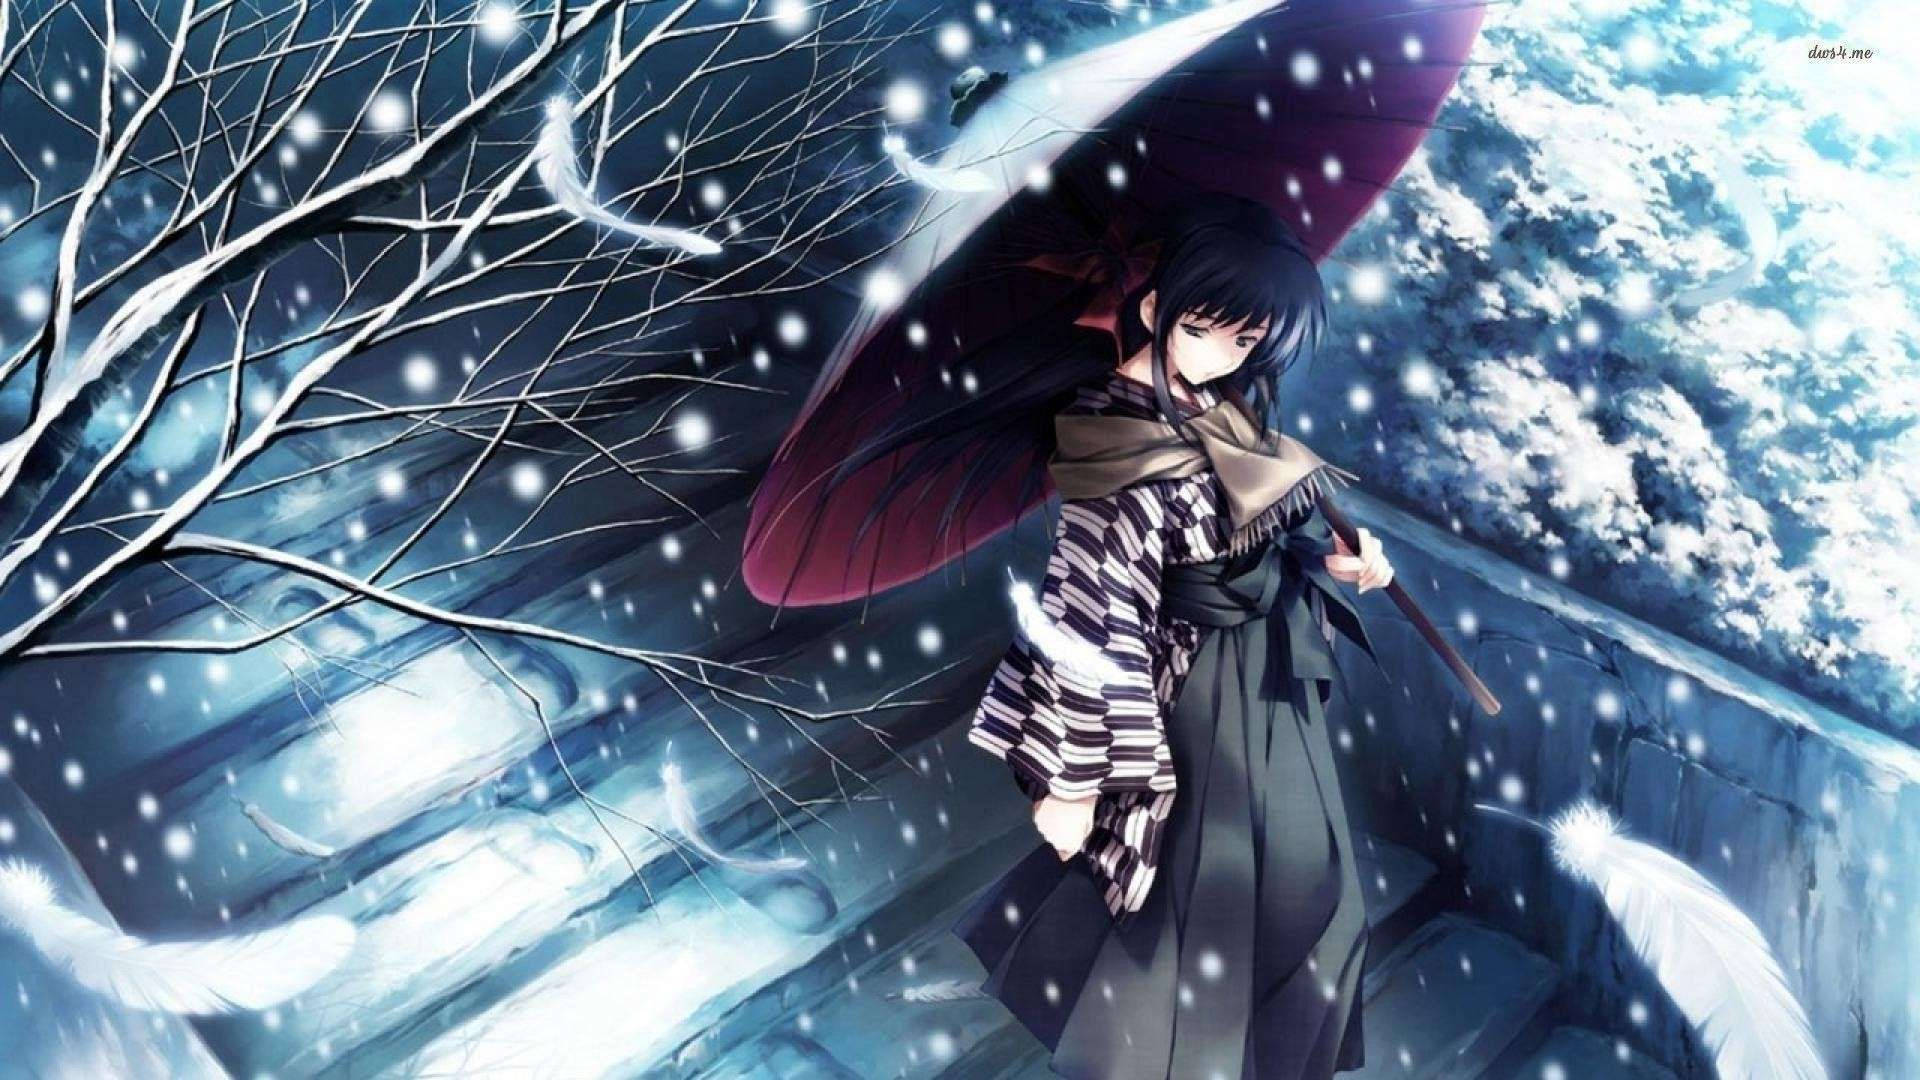 Sad Anime Girl During Snow Background